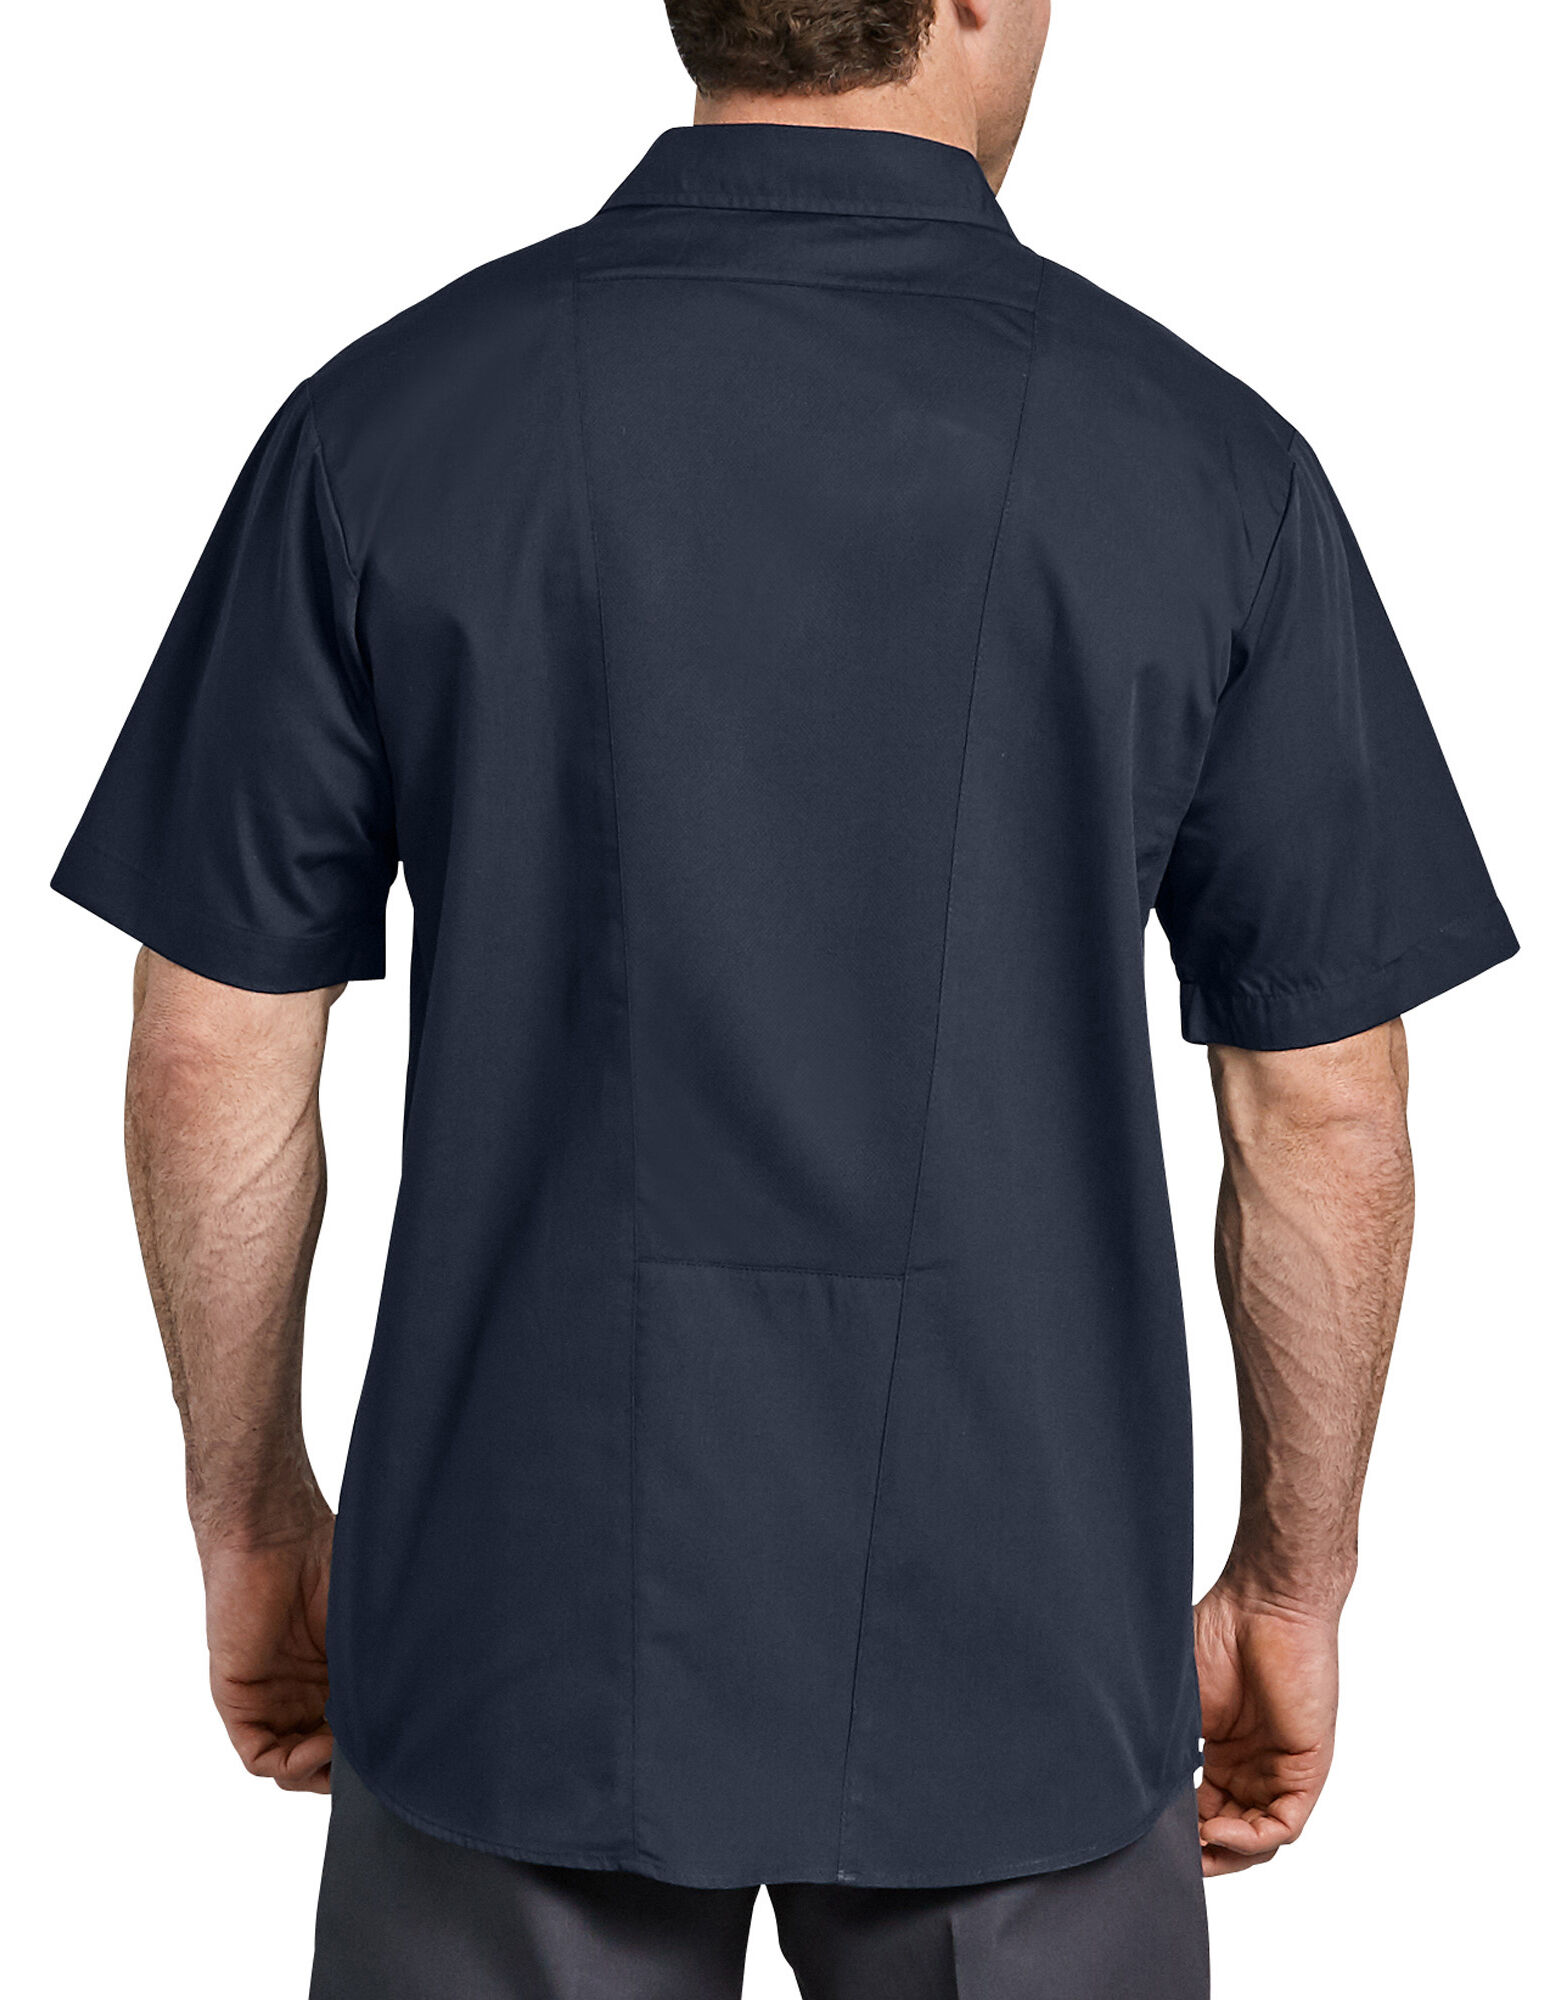 Industrial Shirt Dark Navy | Ventilated Short Sleeve | Dickies